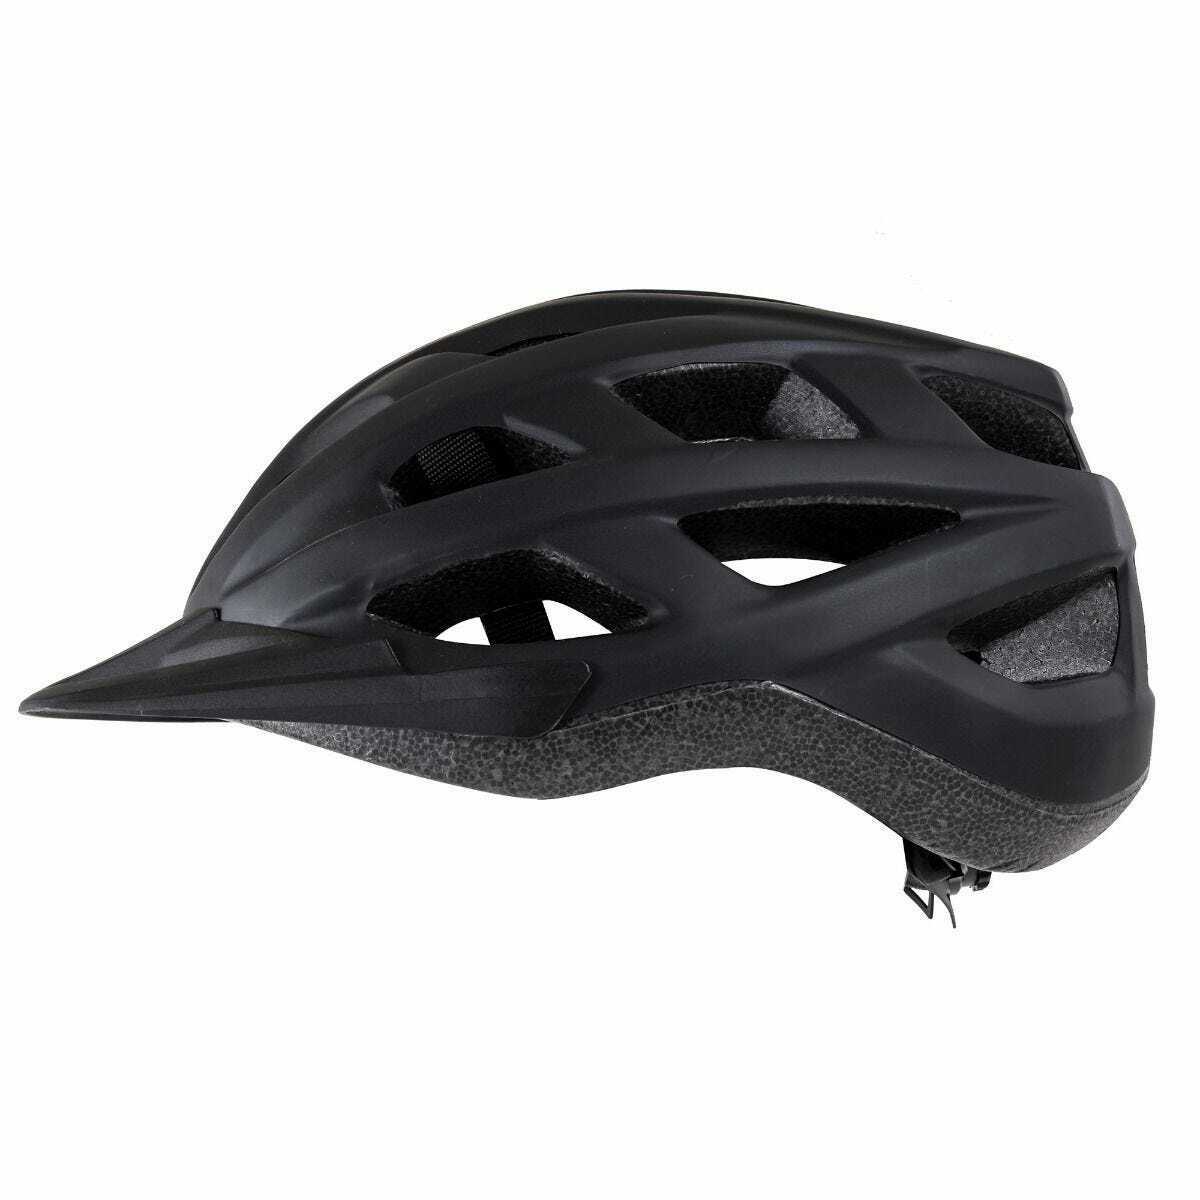 Cycling Cycle Mountain Bike MTB Enduro Hybrid Trail Adults Details about   Helmet 58-62cm 